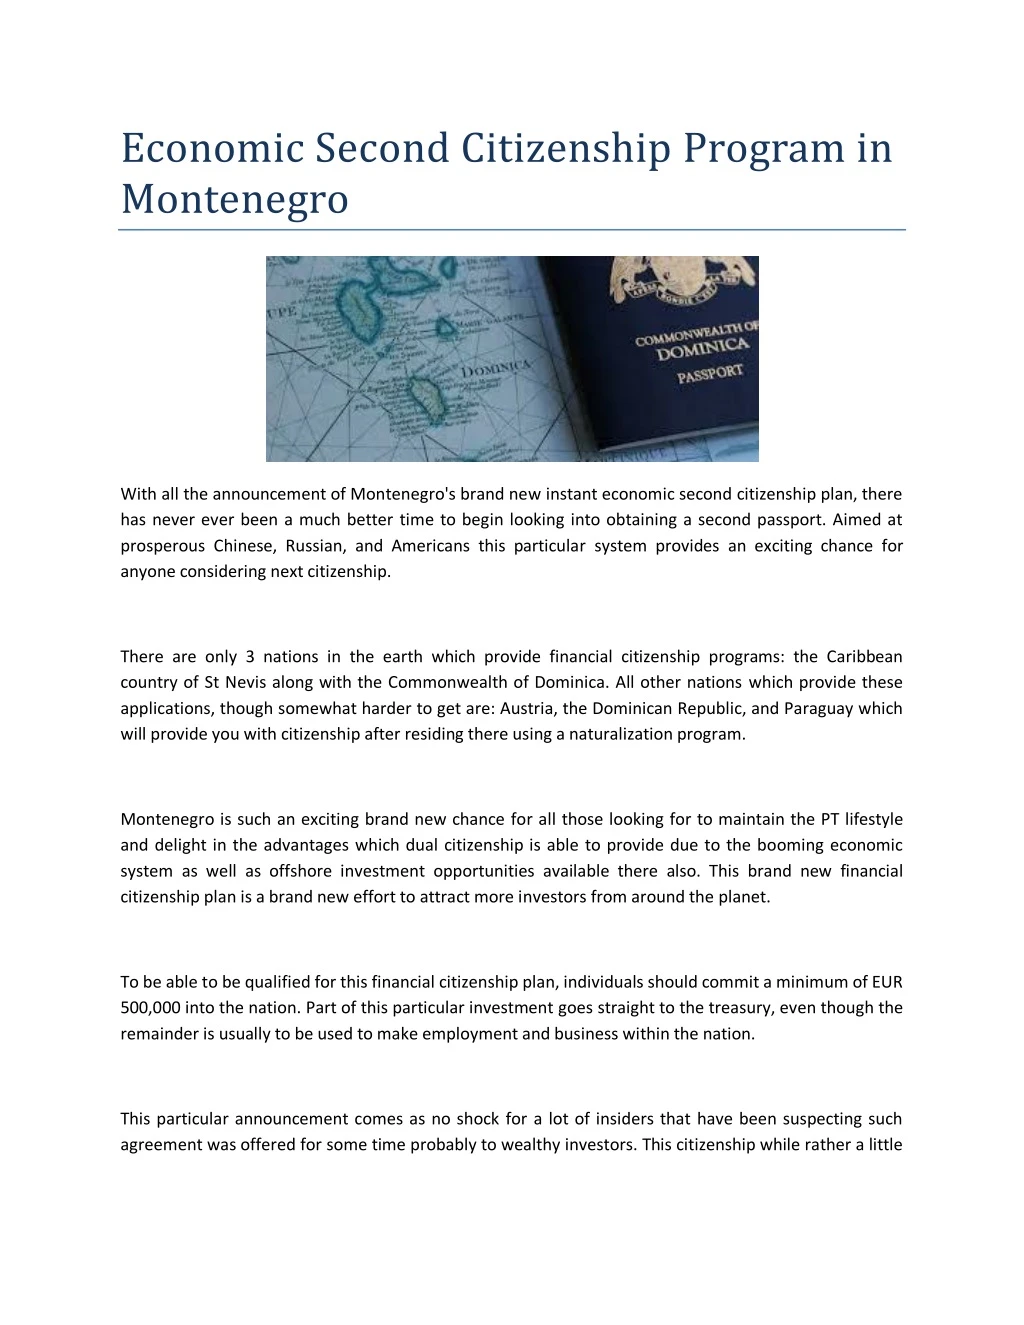 economic second citizenship program in montenegro